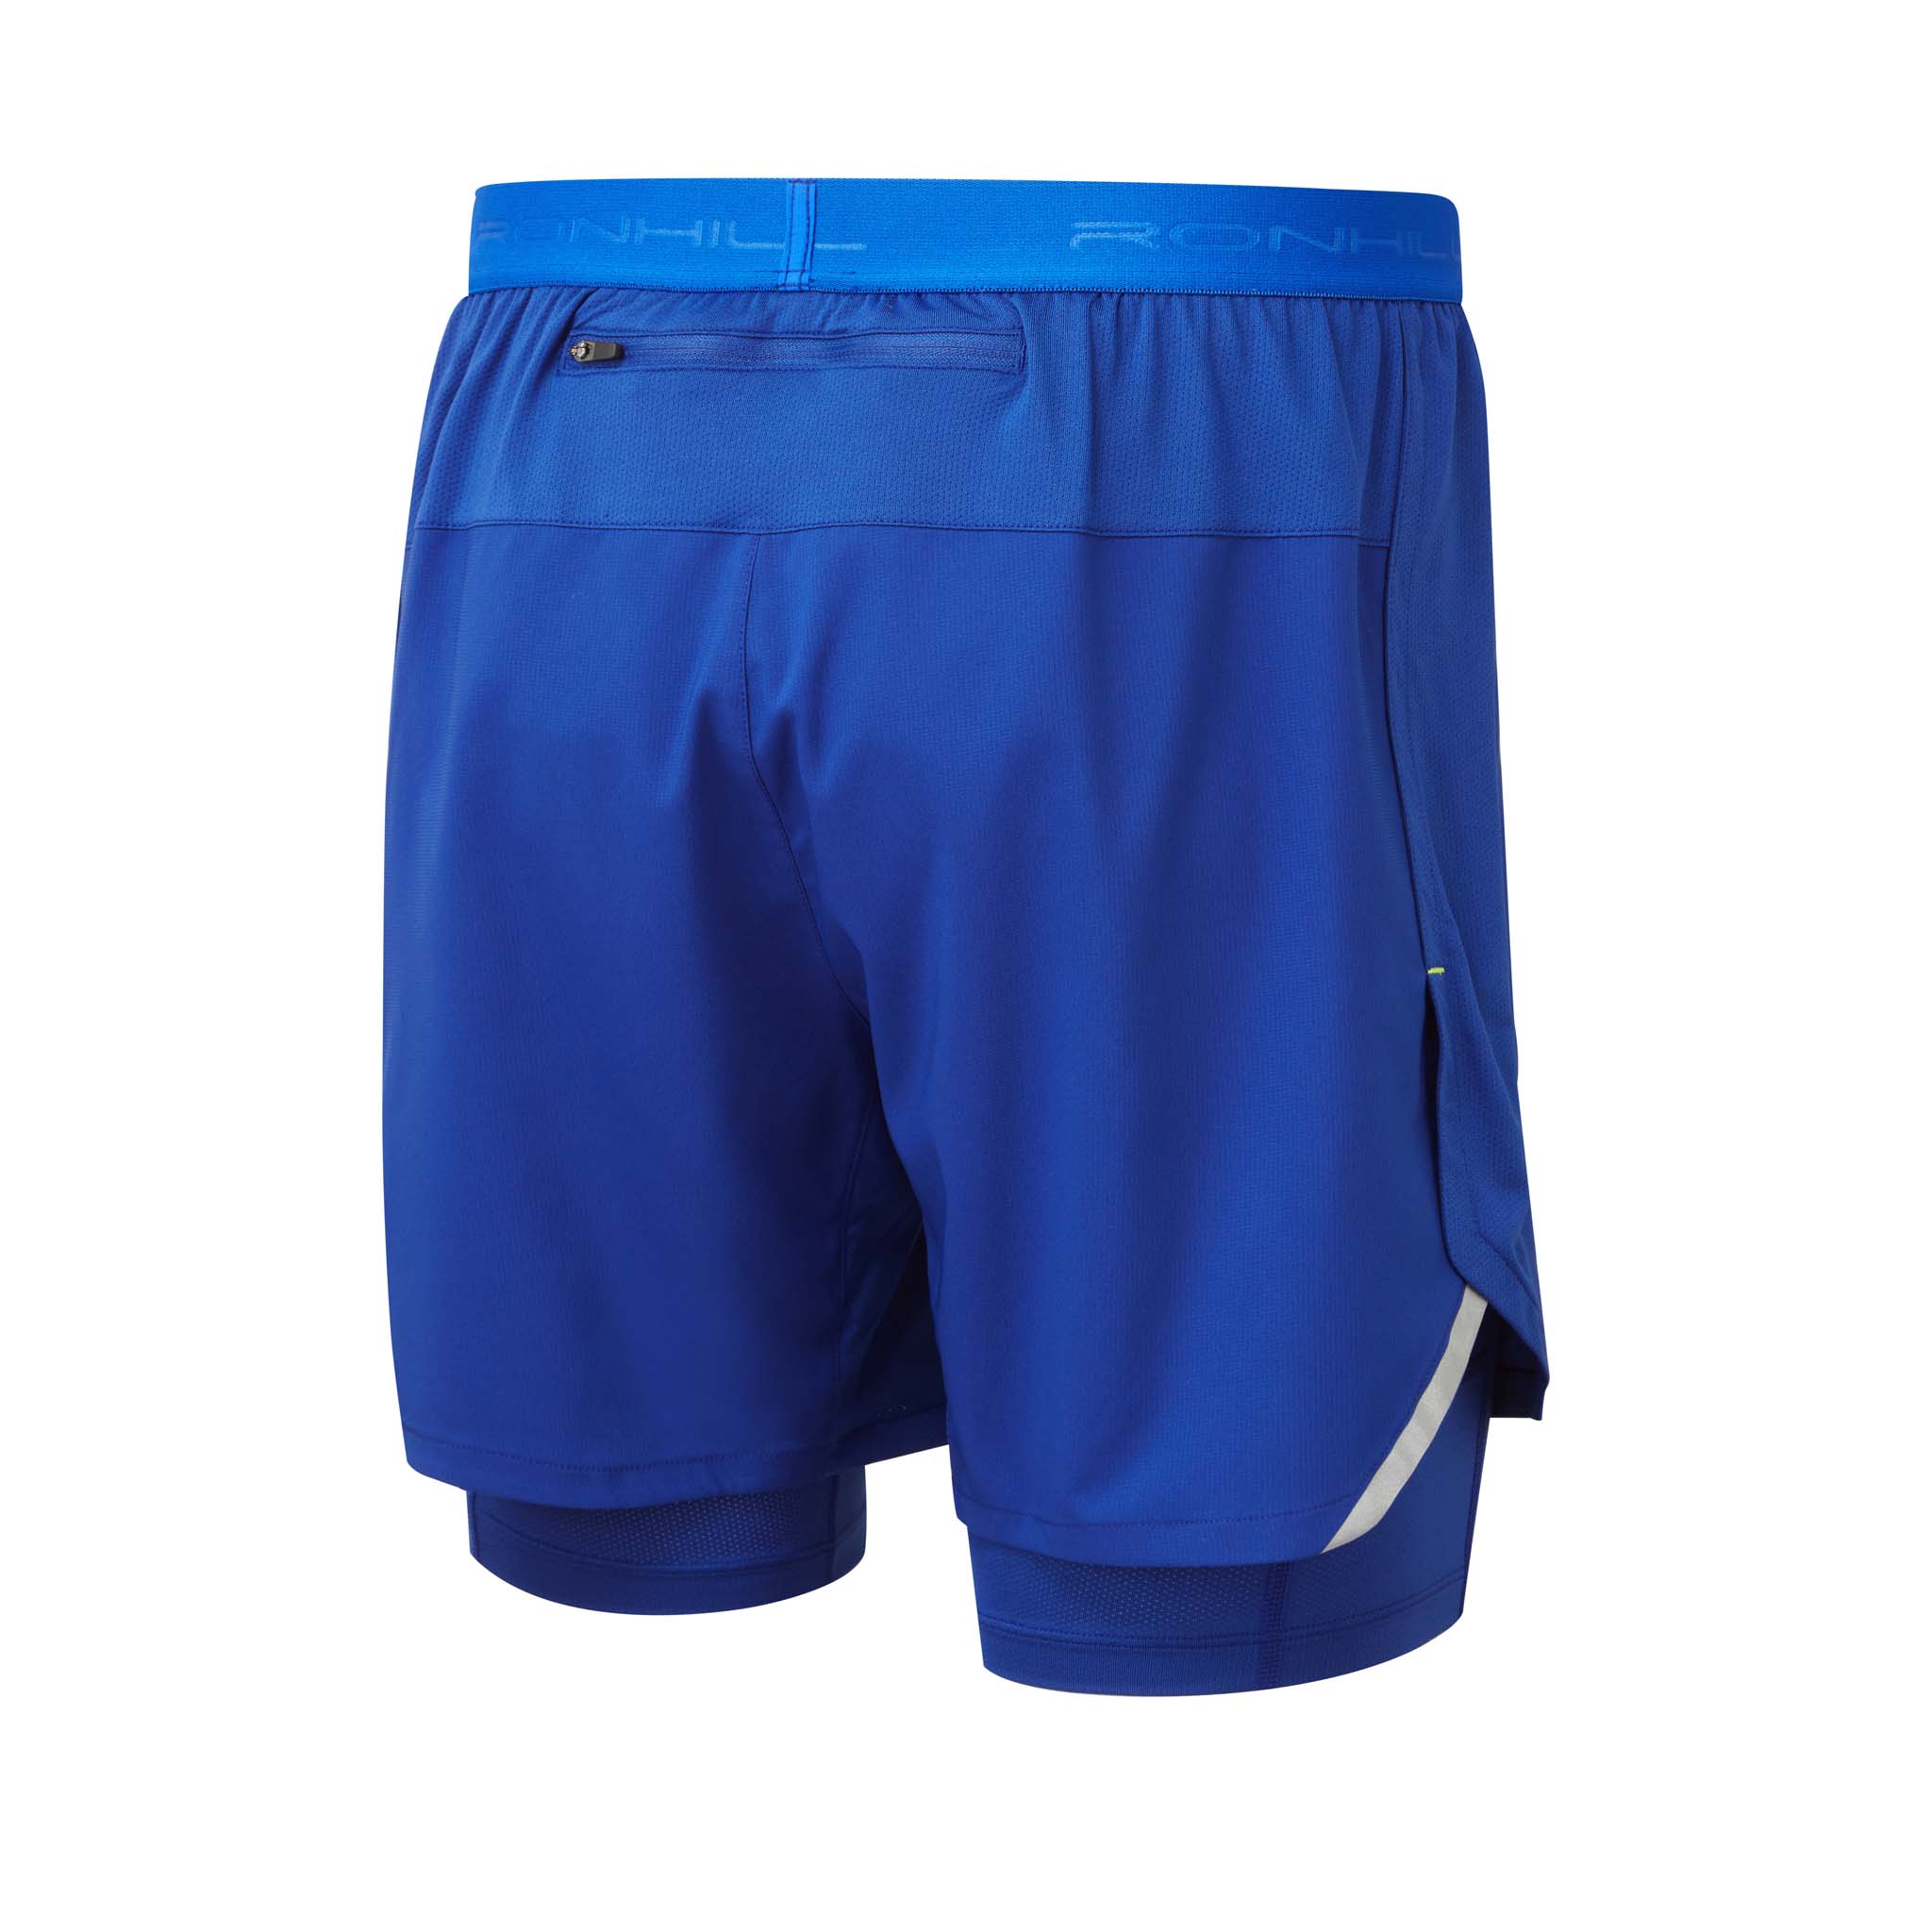 Men's Running Shorts - 2in1, brief-lined & tight shorts